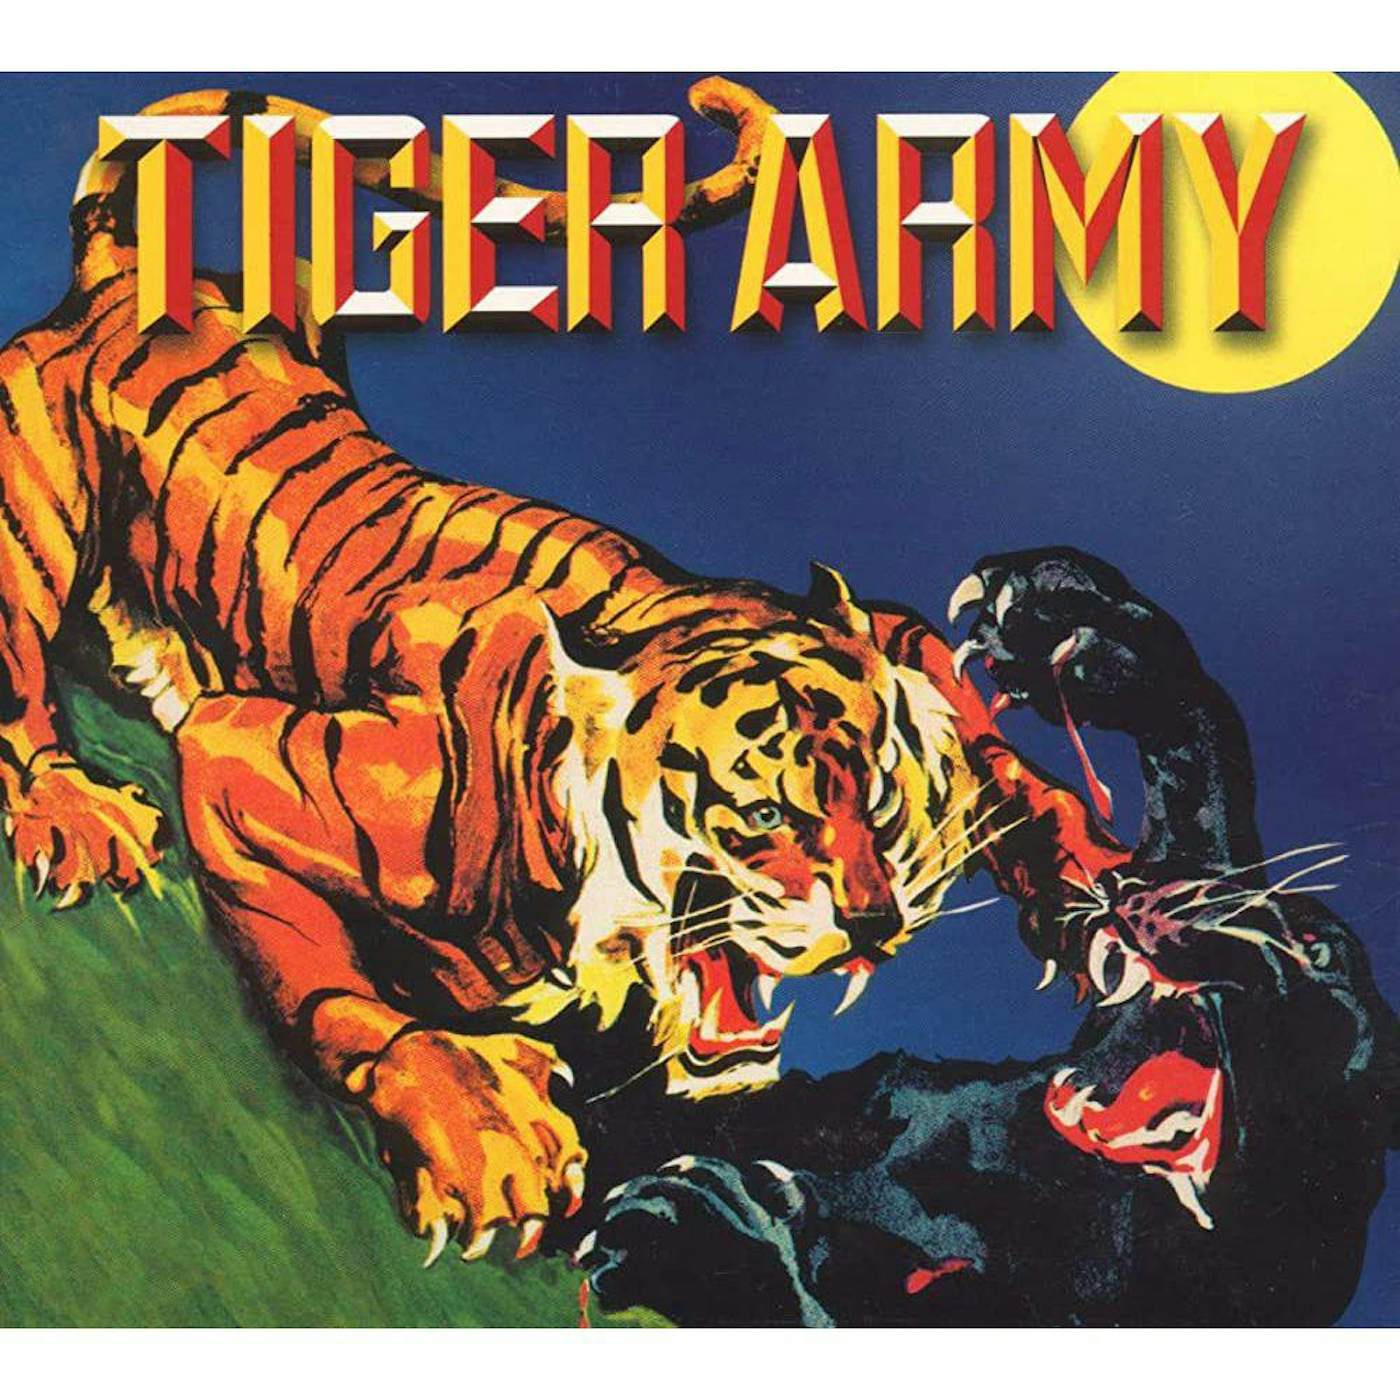 Tiger Army Vinyl Record